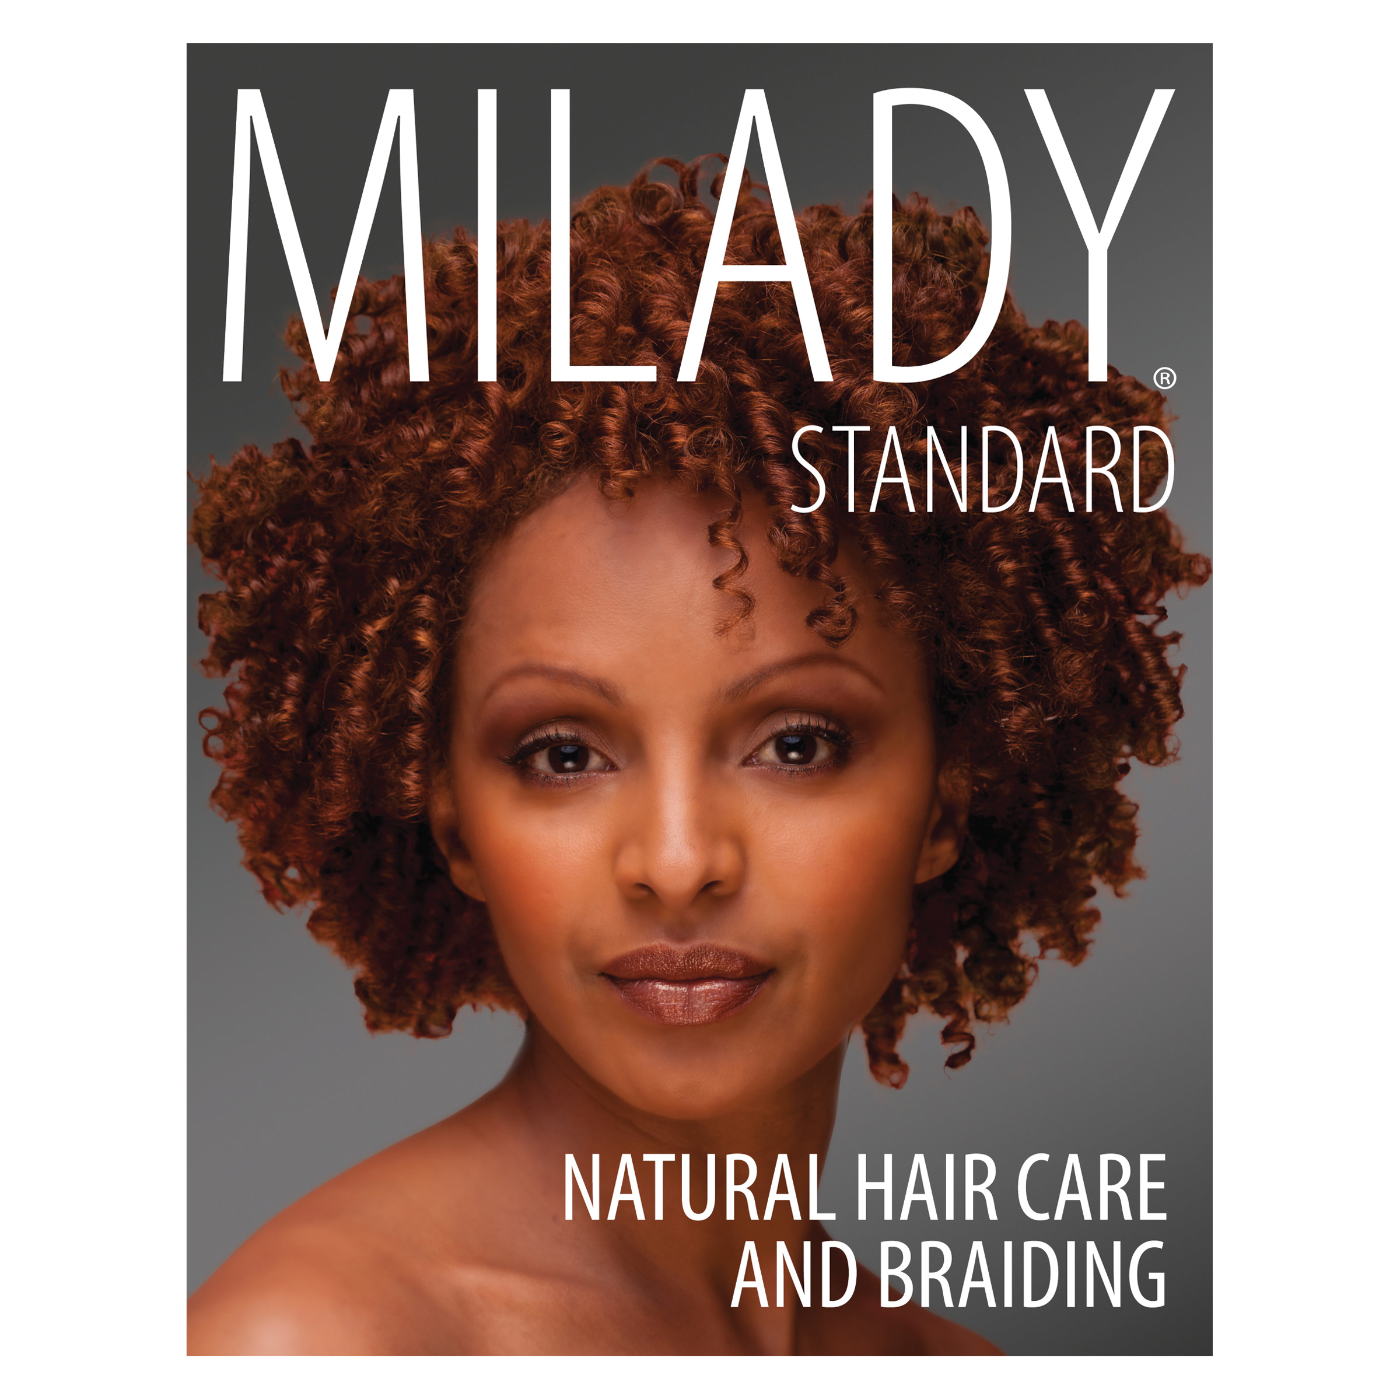 Standard Natural Hair Care and Braiding Textbook